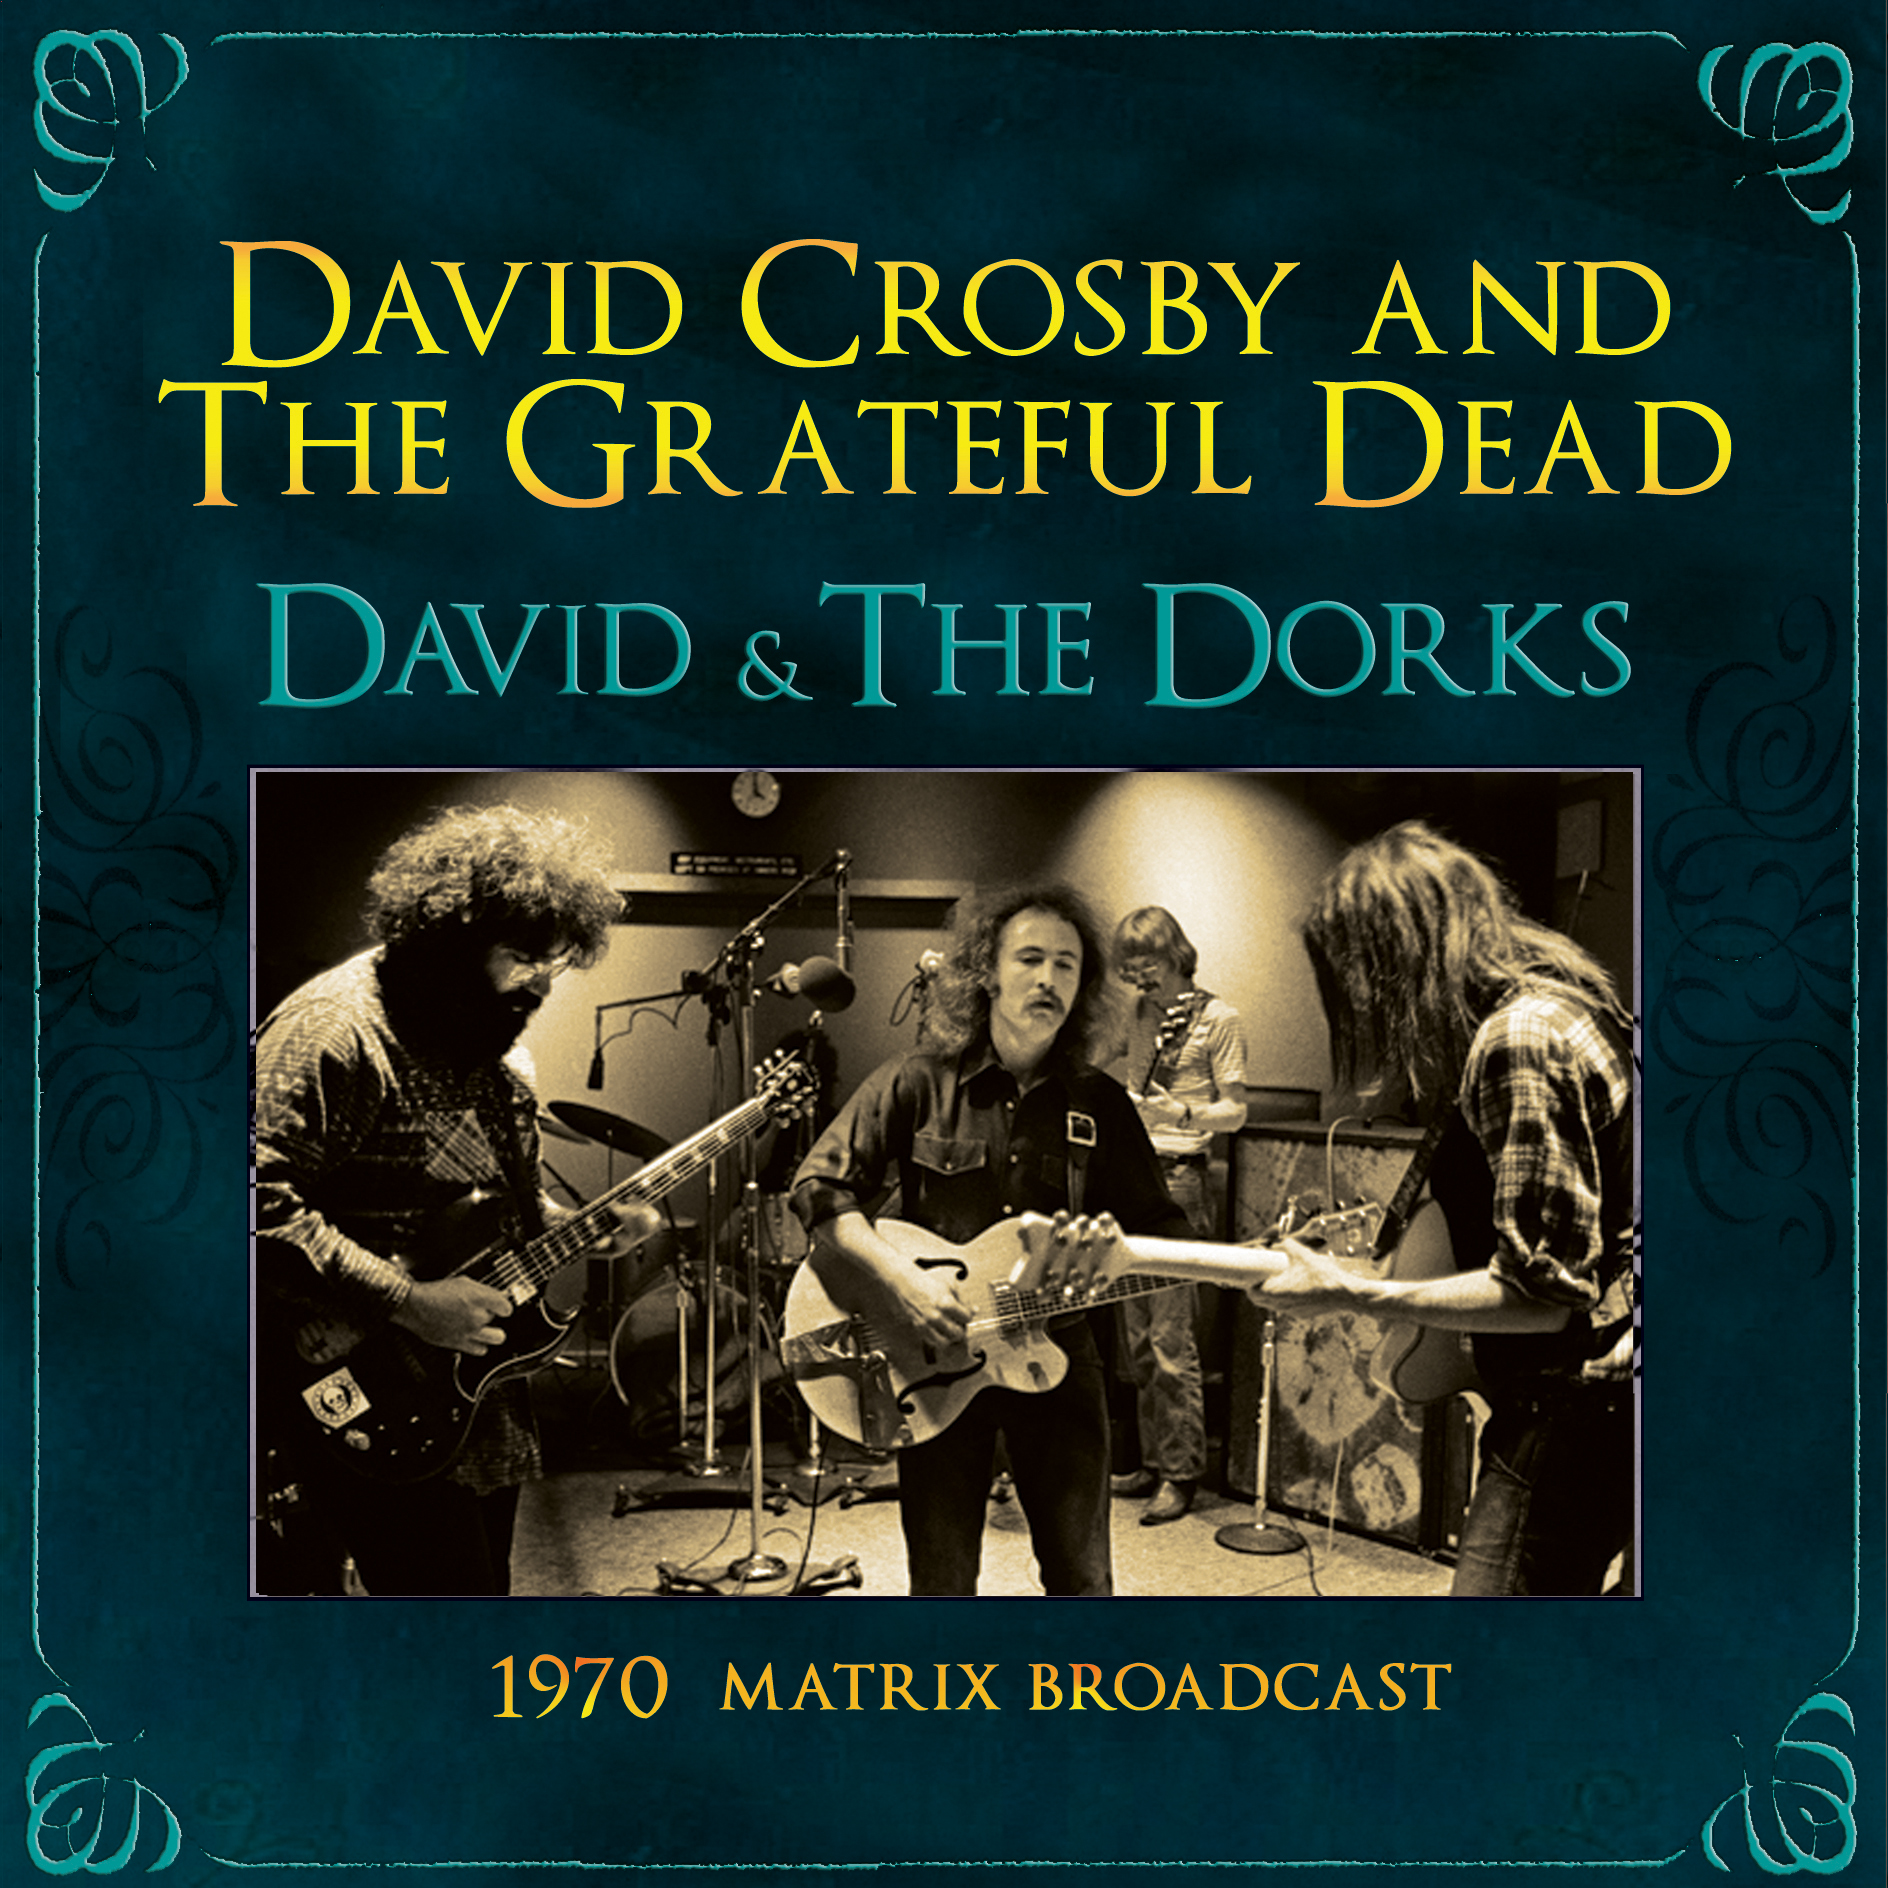 David Crosby & Grateful Dead - David & The Dorks: 1970 Matrix Broadcast